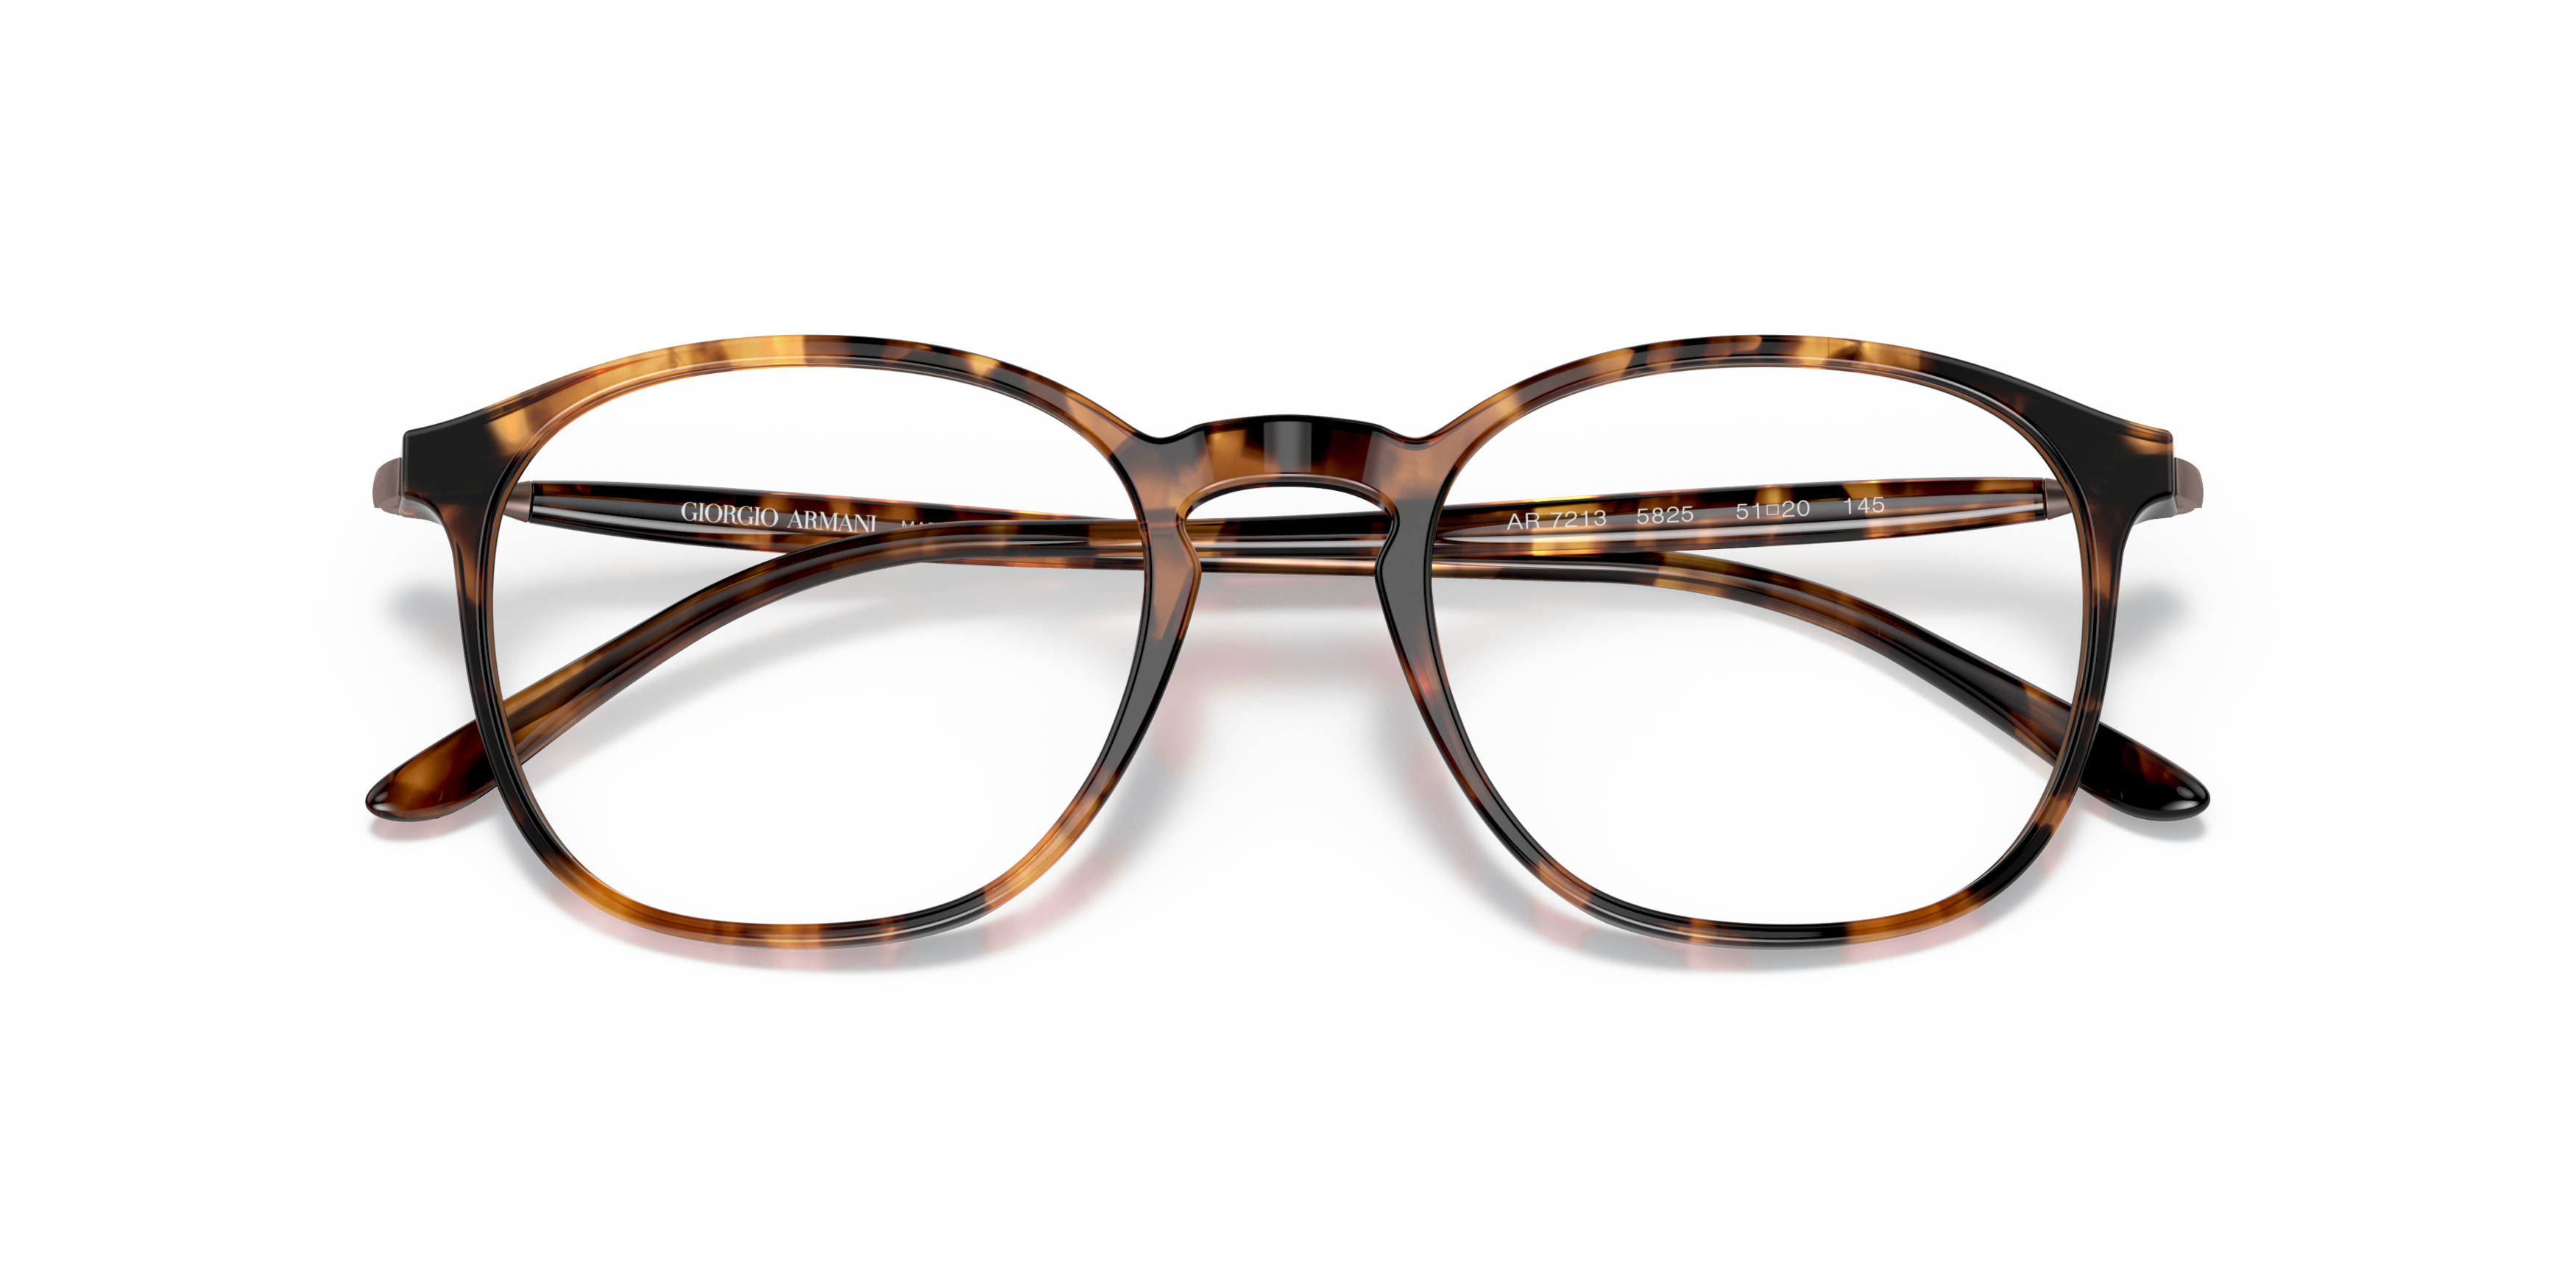 Folded Giorgio Armani AR 7213 (5825) Glasses Transparent / Tortoise Shell